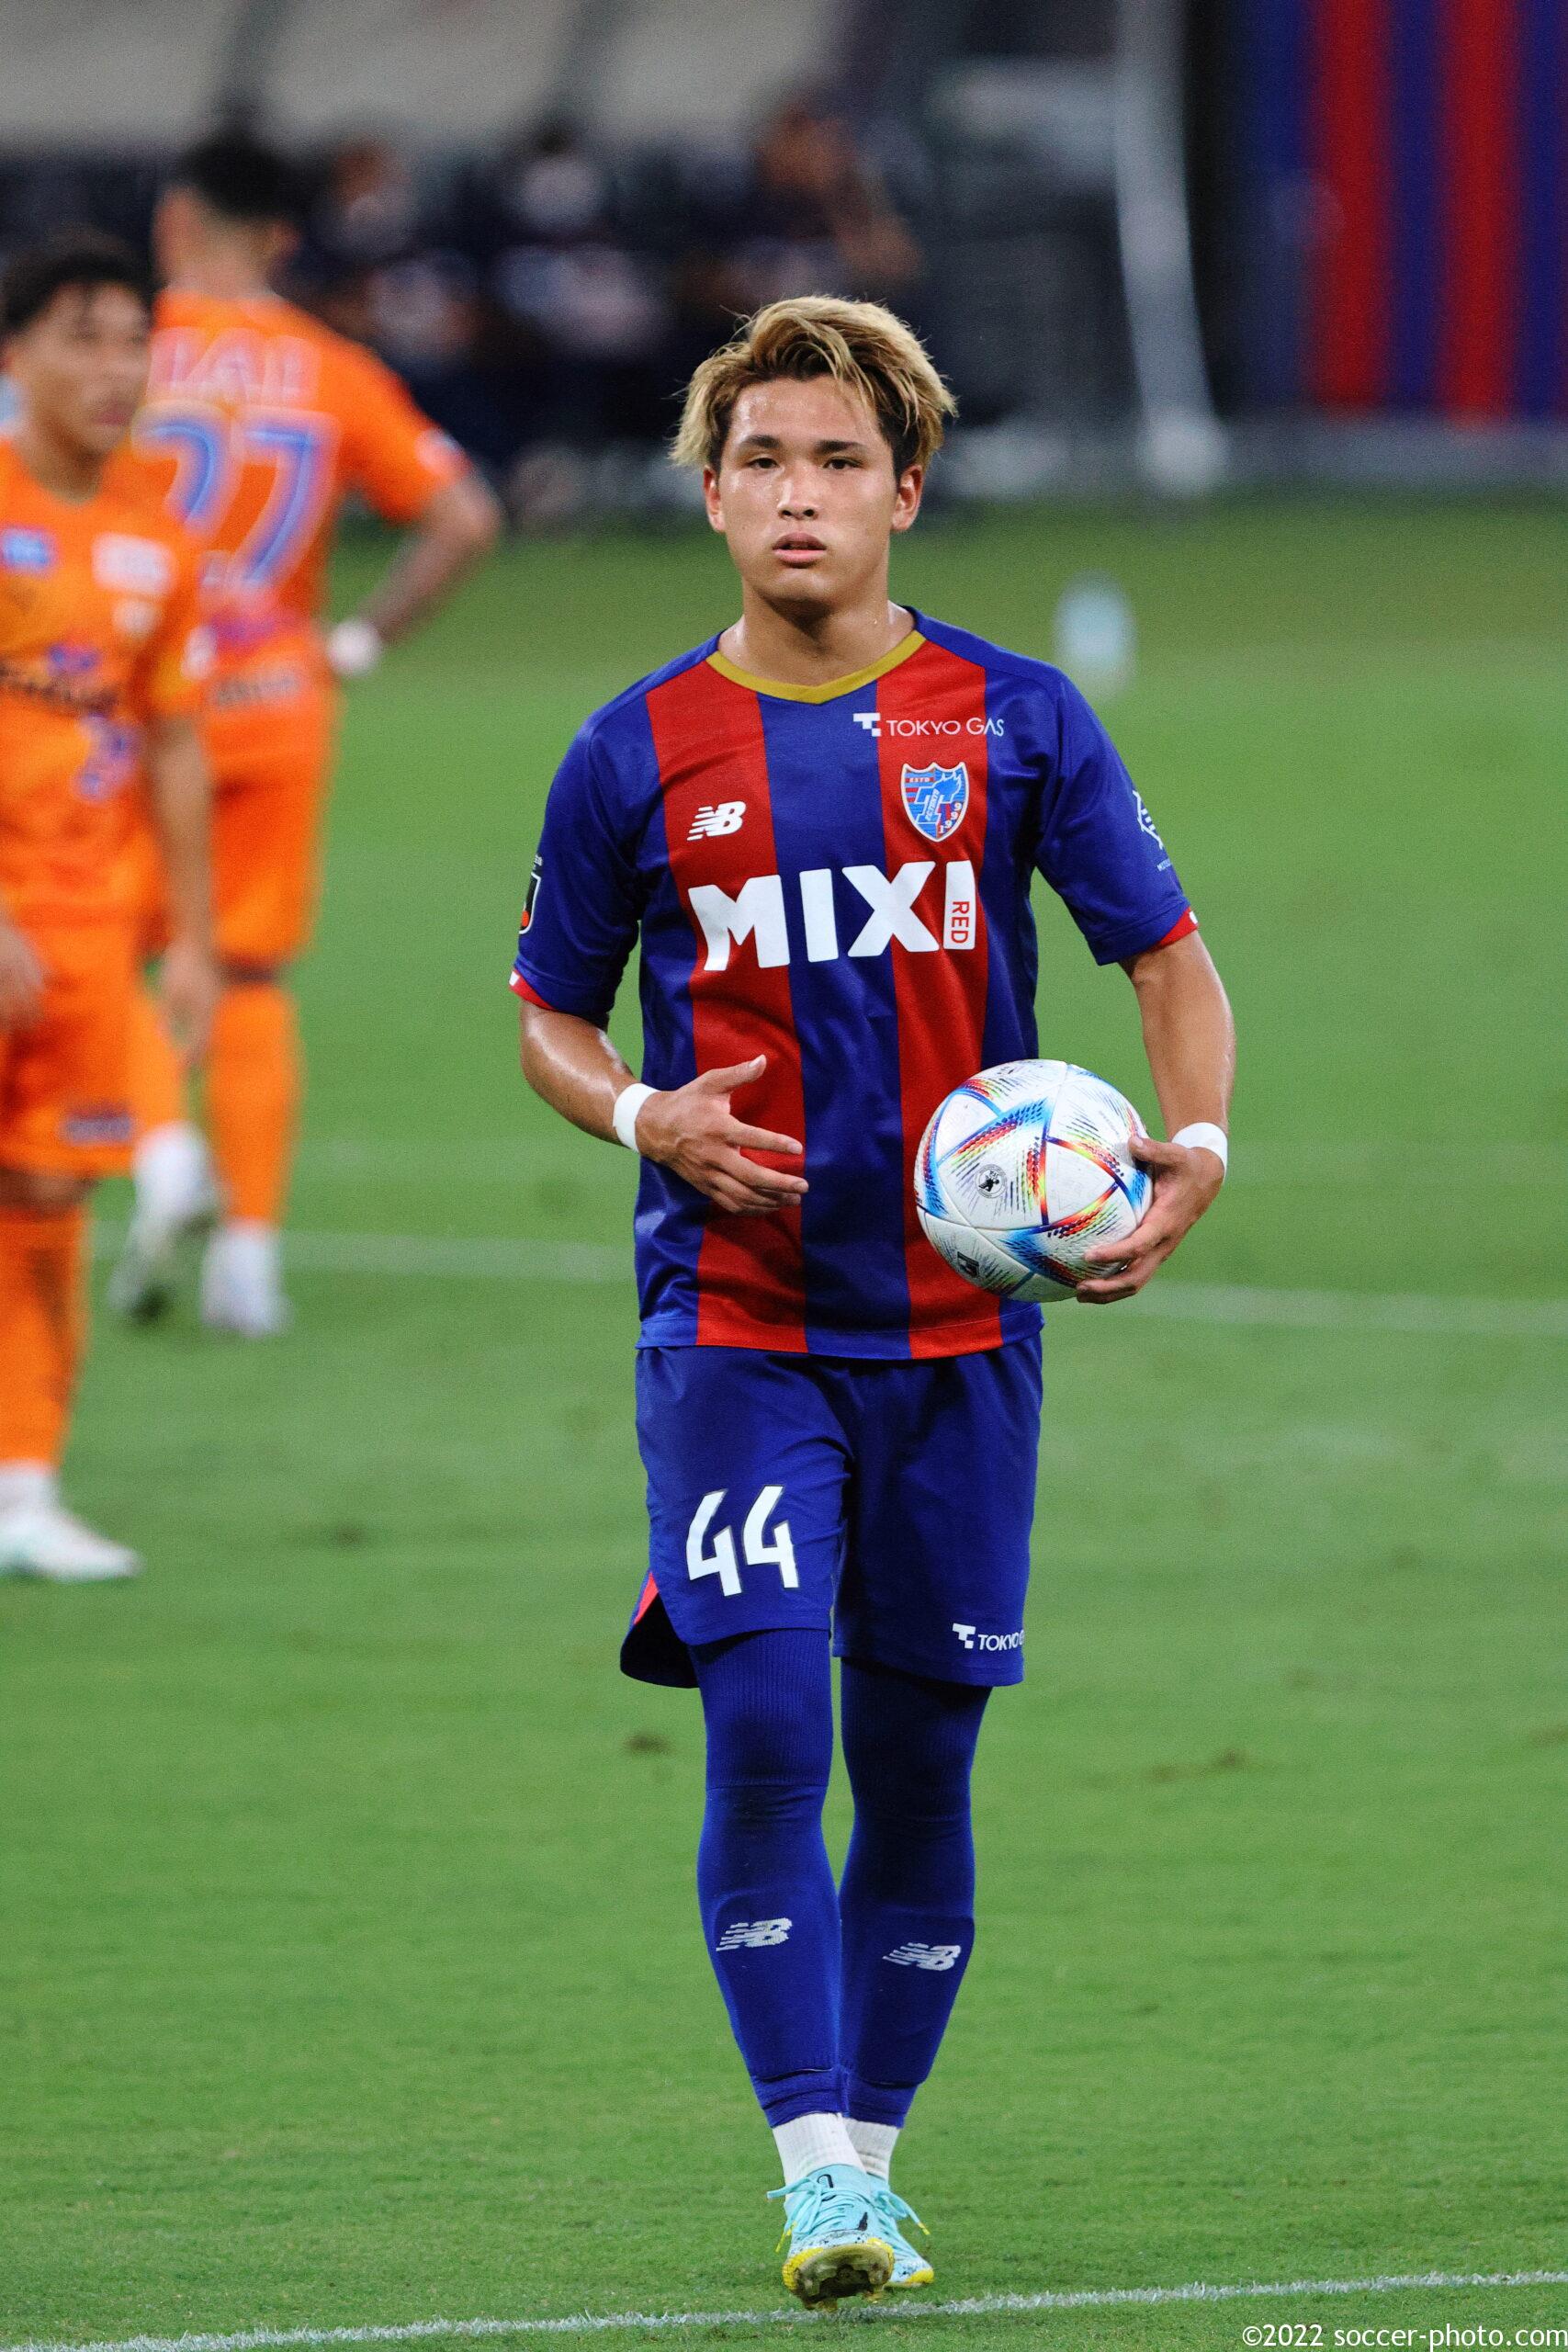 FC東京 No.44 MF 松木玖生選手 2022.08.07 FC東京vs清水エスパルス (写真 soccer-photo.com)